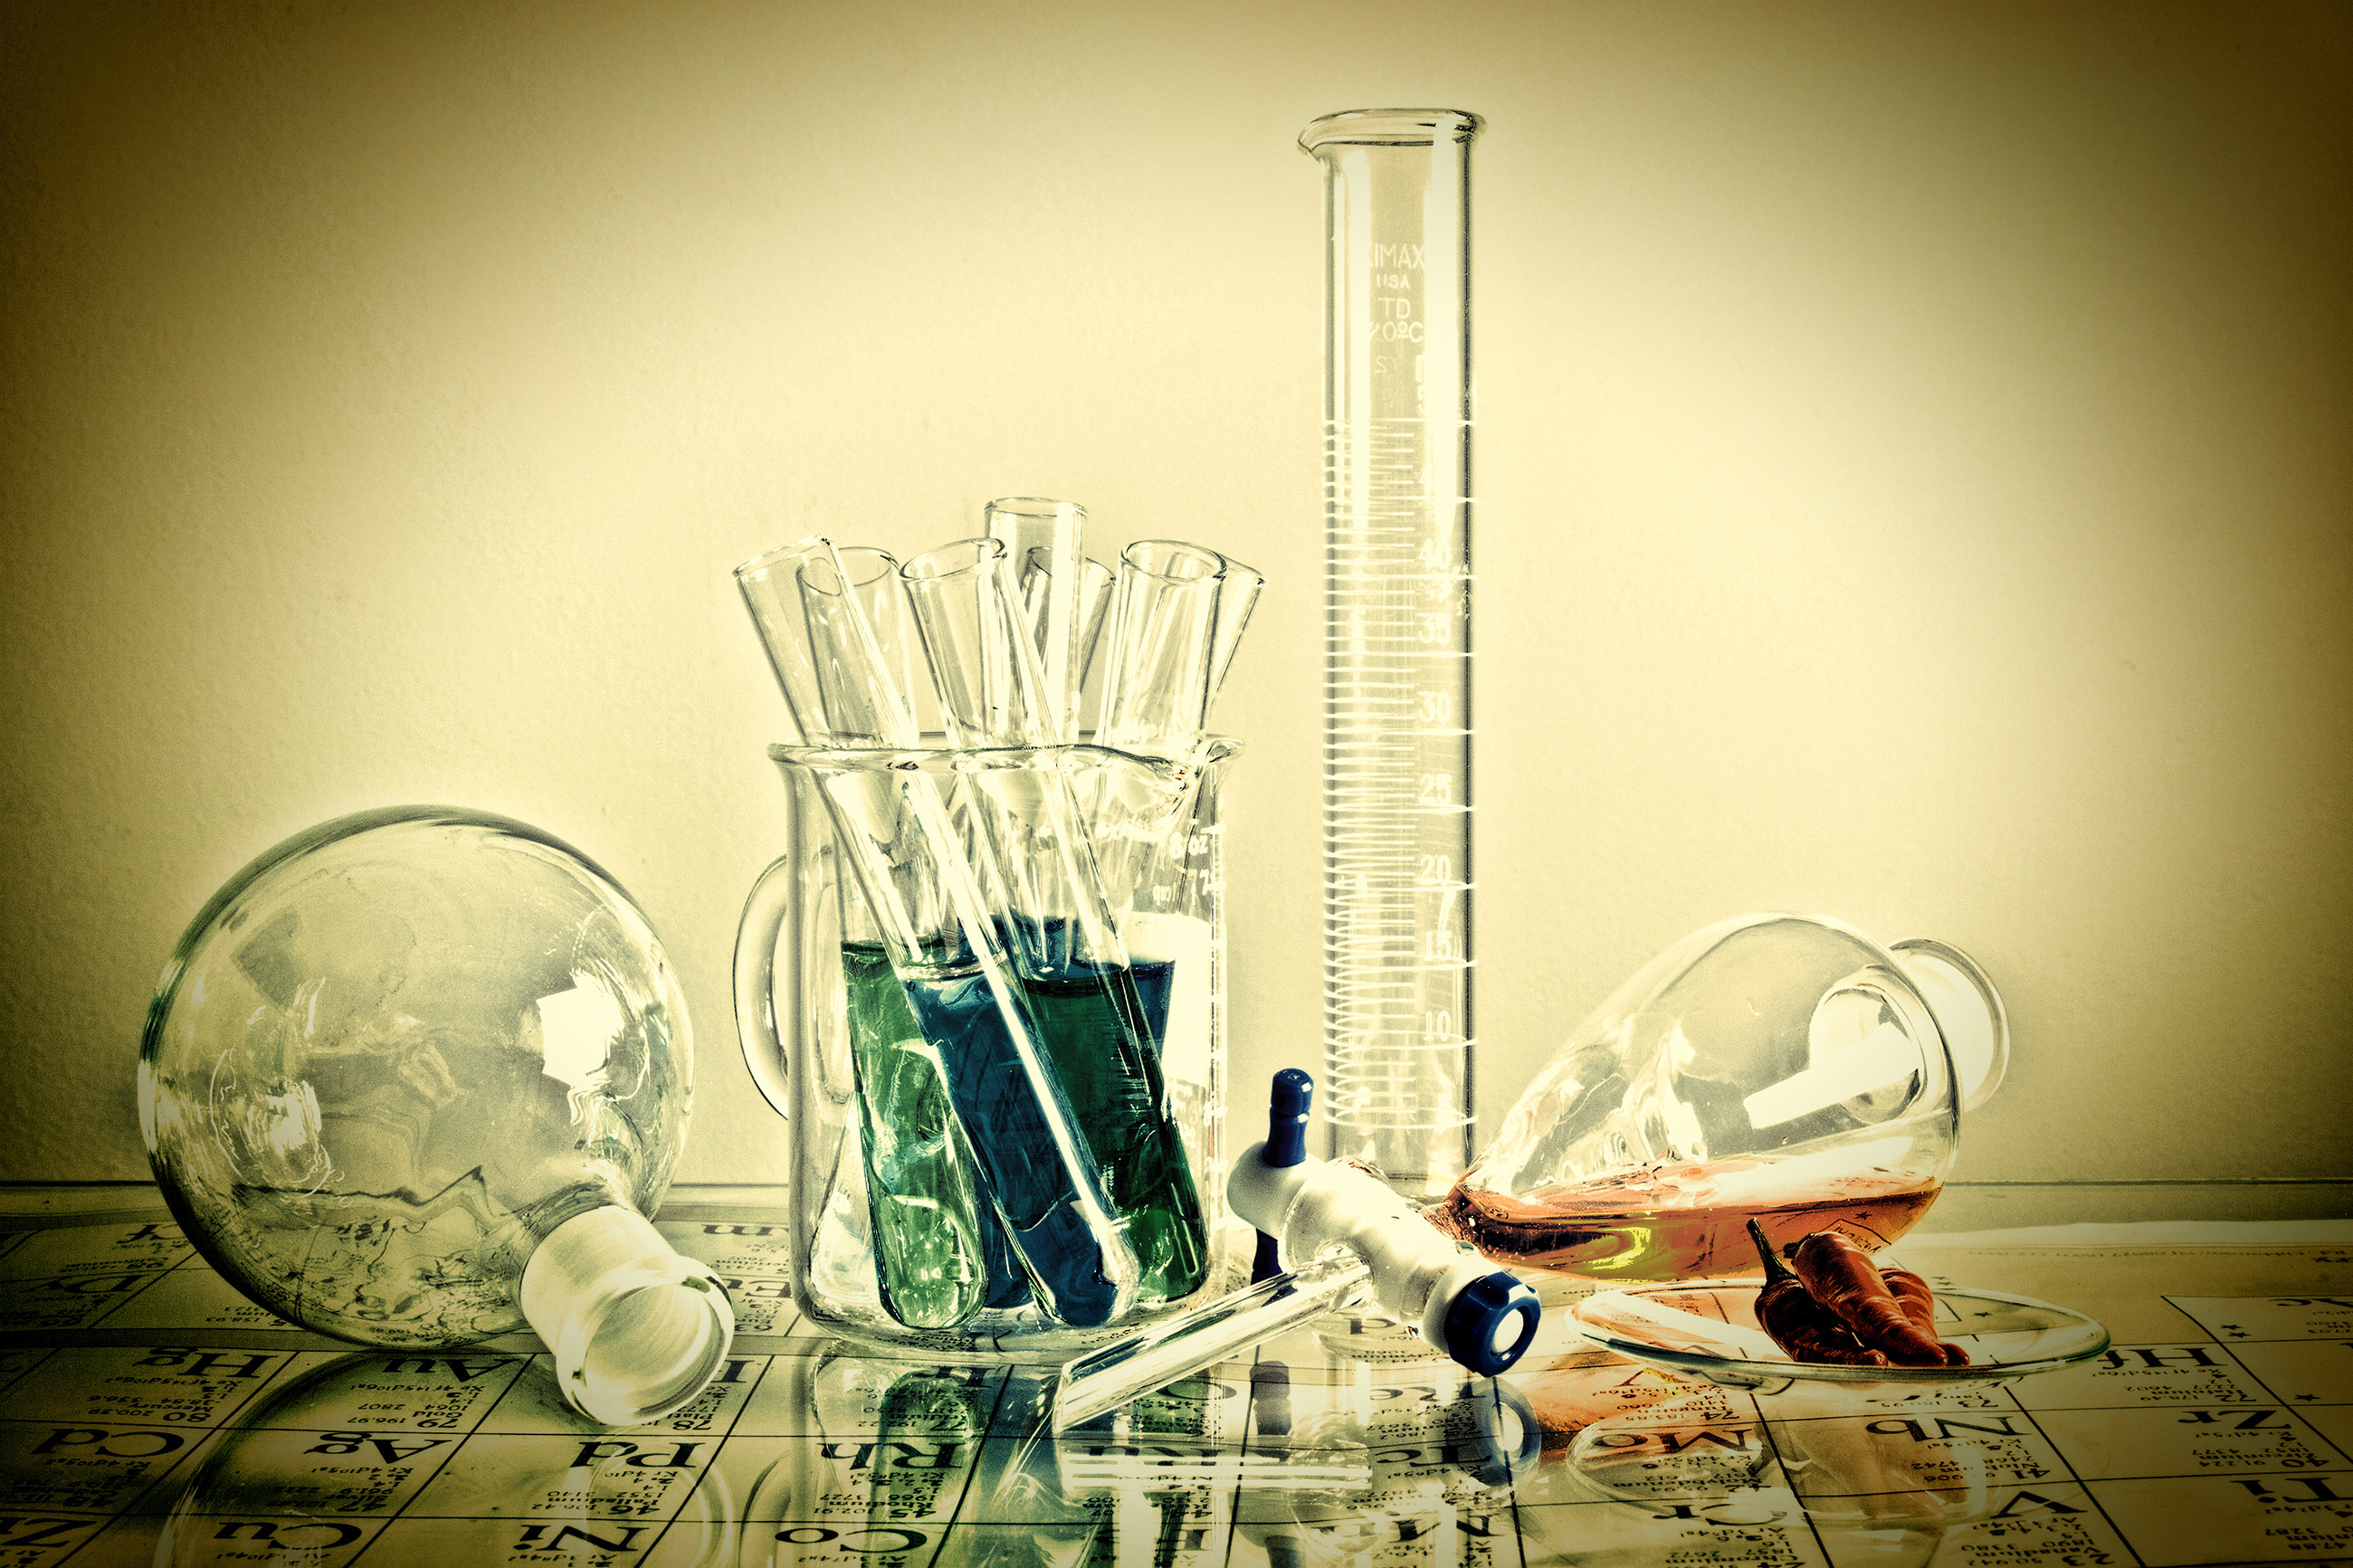 Chemistry glassware photo